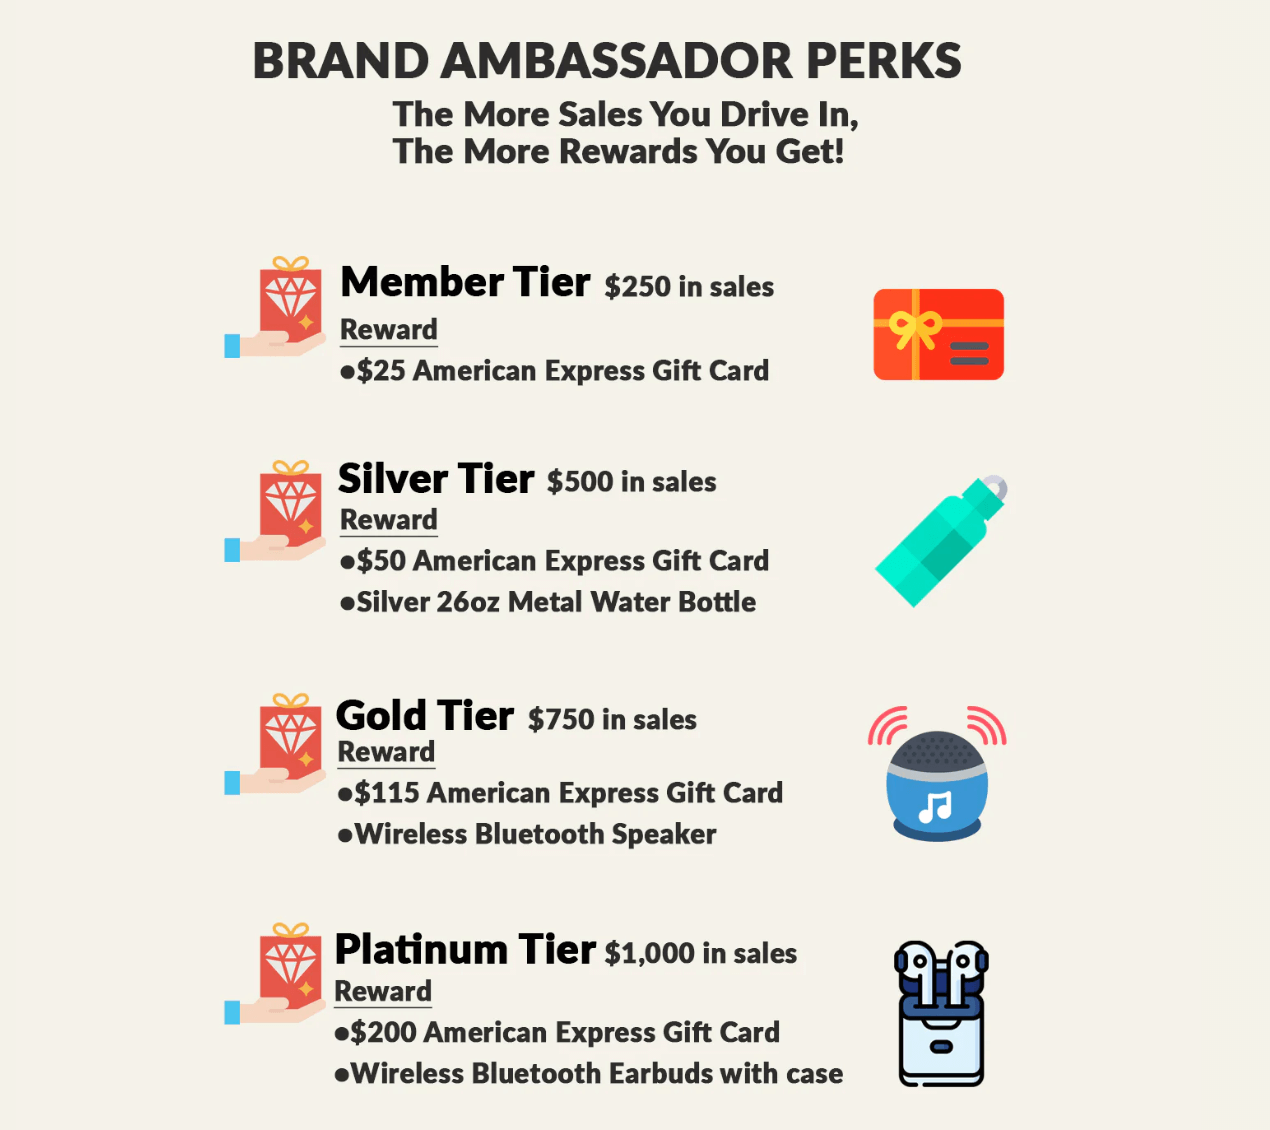 Top 12 Brand Ambassador Perks for Long-Term Engagement